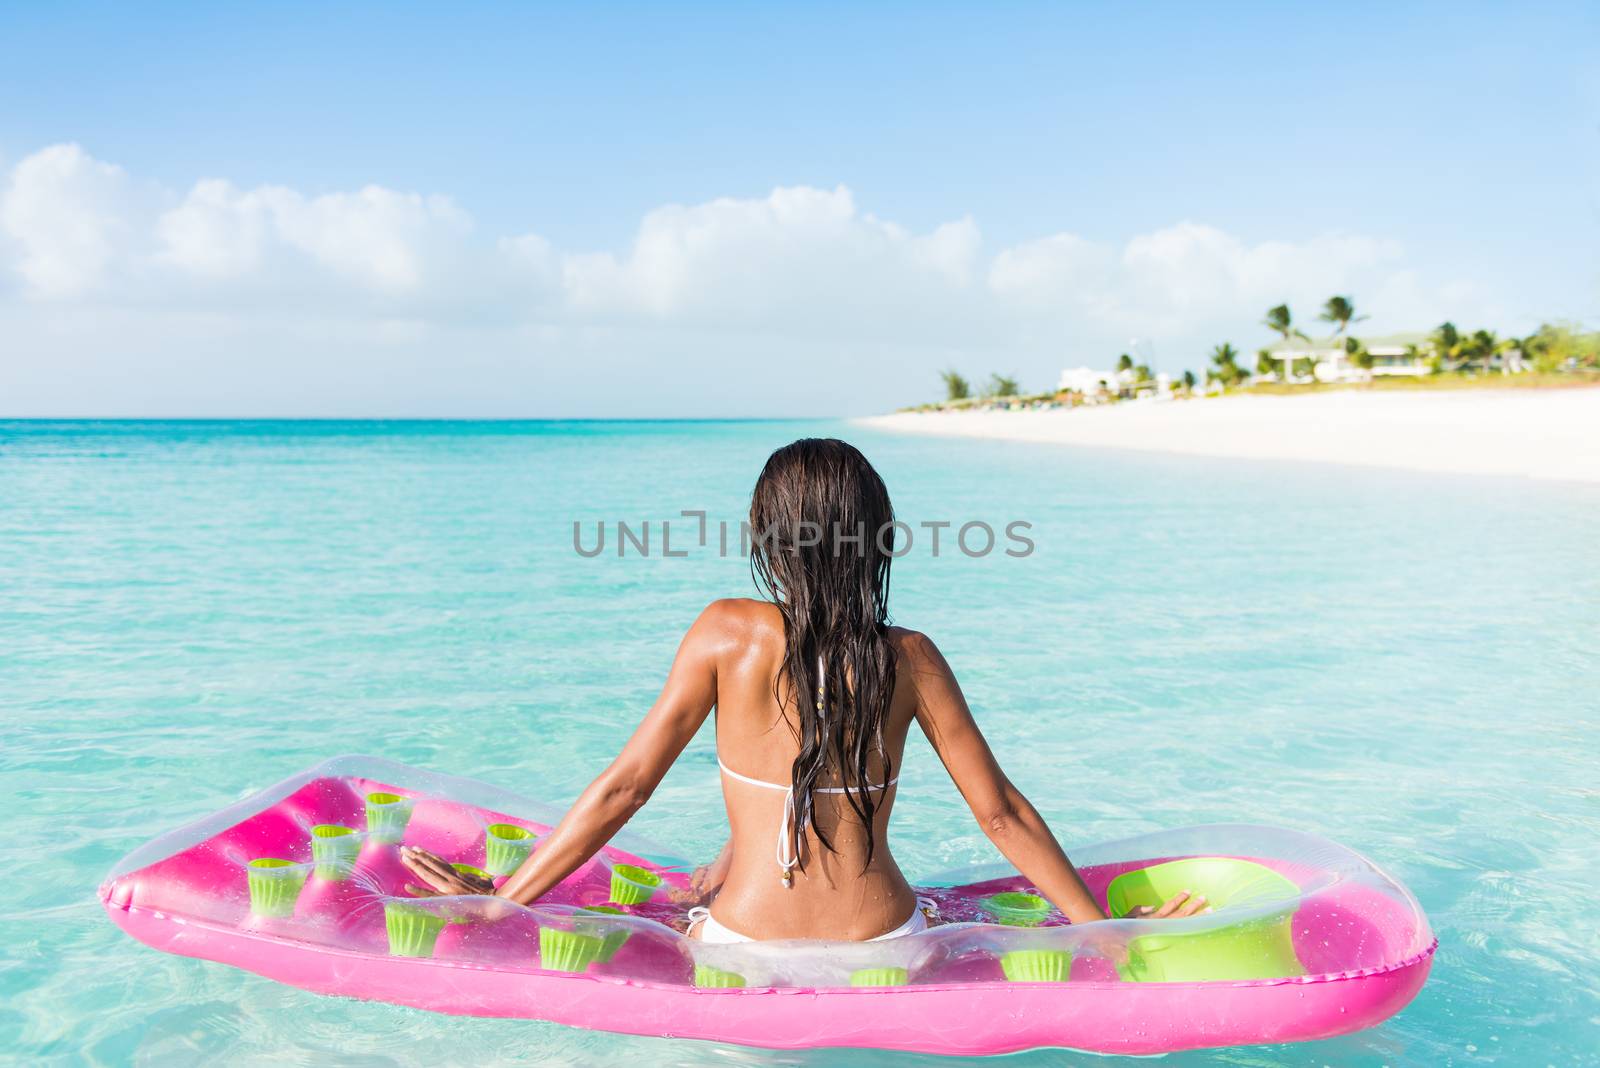 Beach woman floating on ocean water pool mattress by Maridav